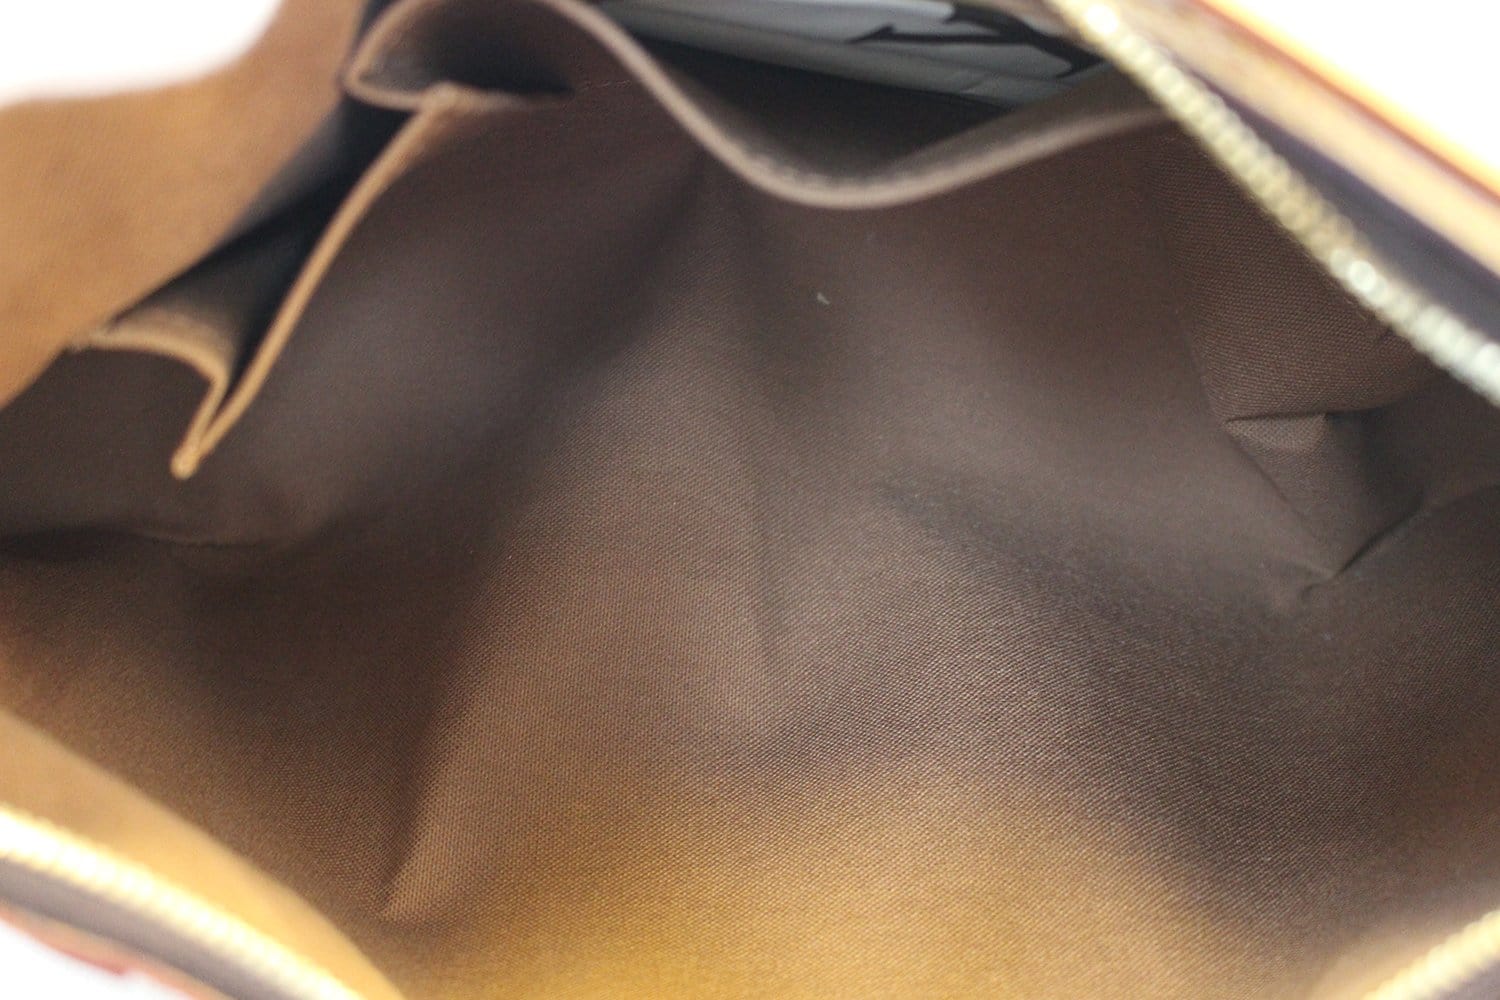 Authentic LV Thames bag